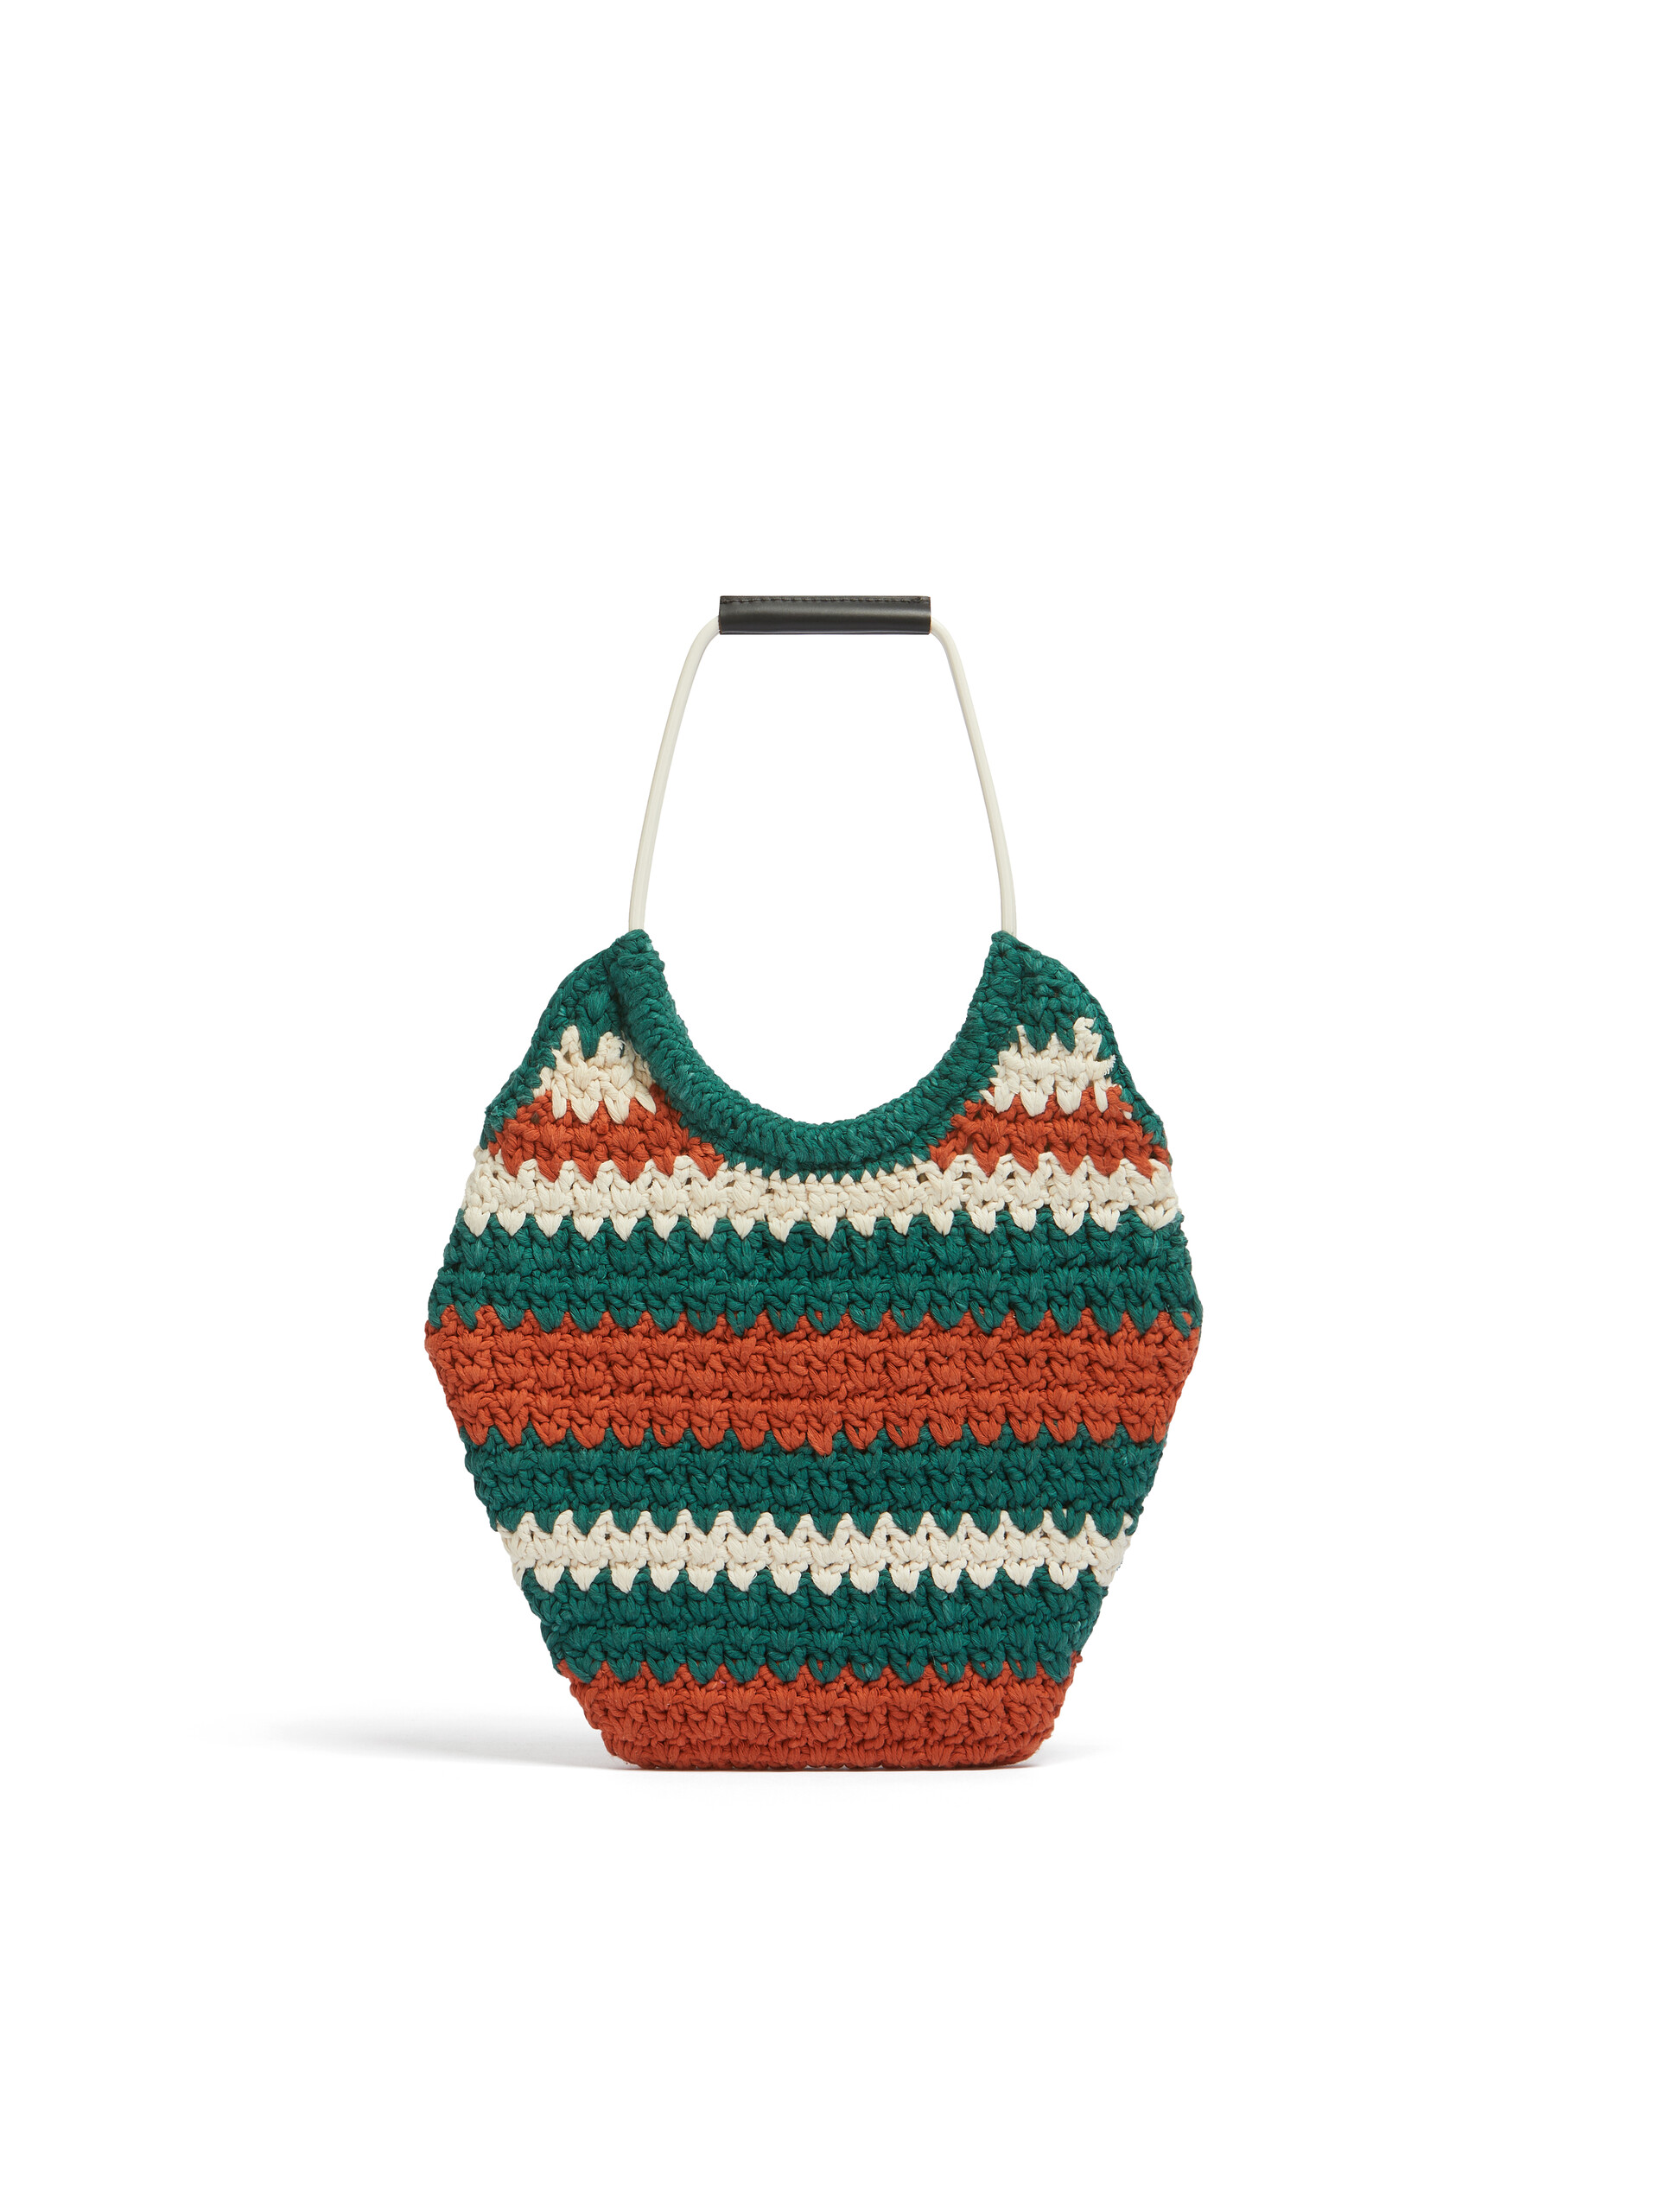 Brown striped cotton crochet MARNI MARKET handbag - Shopping Bags - Image 3